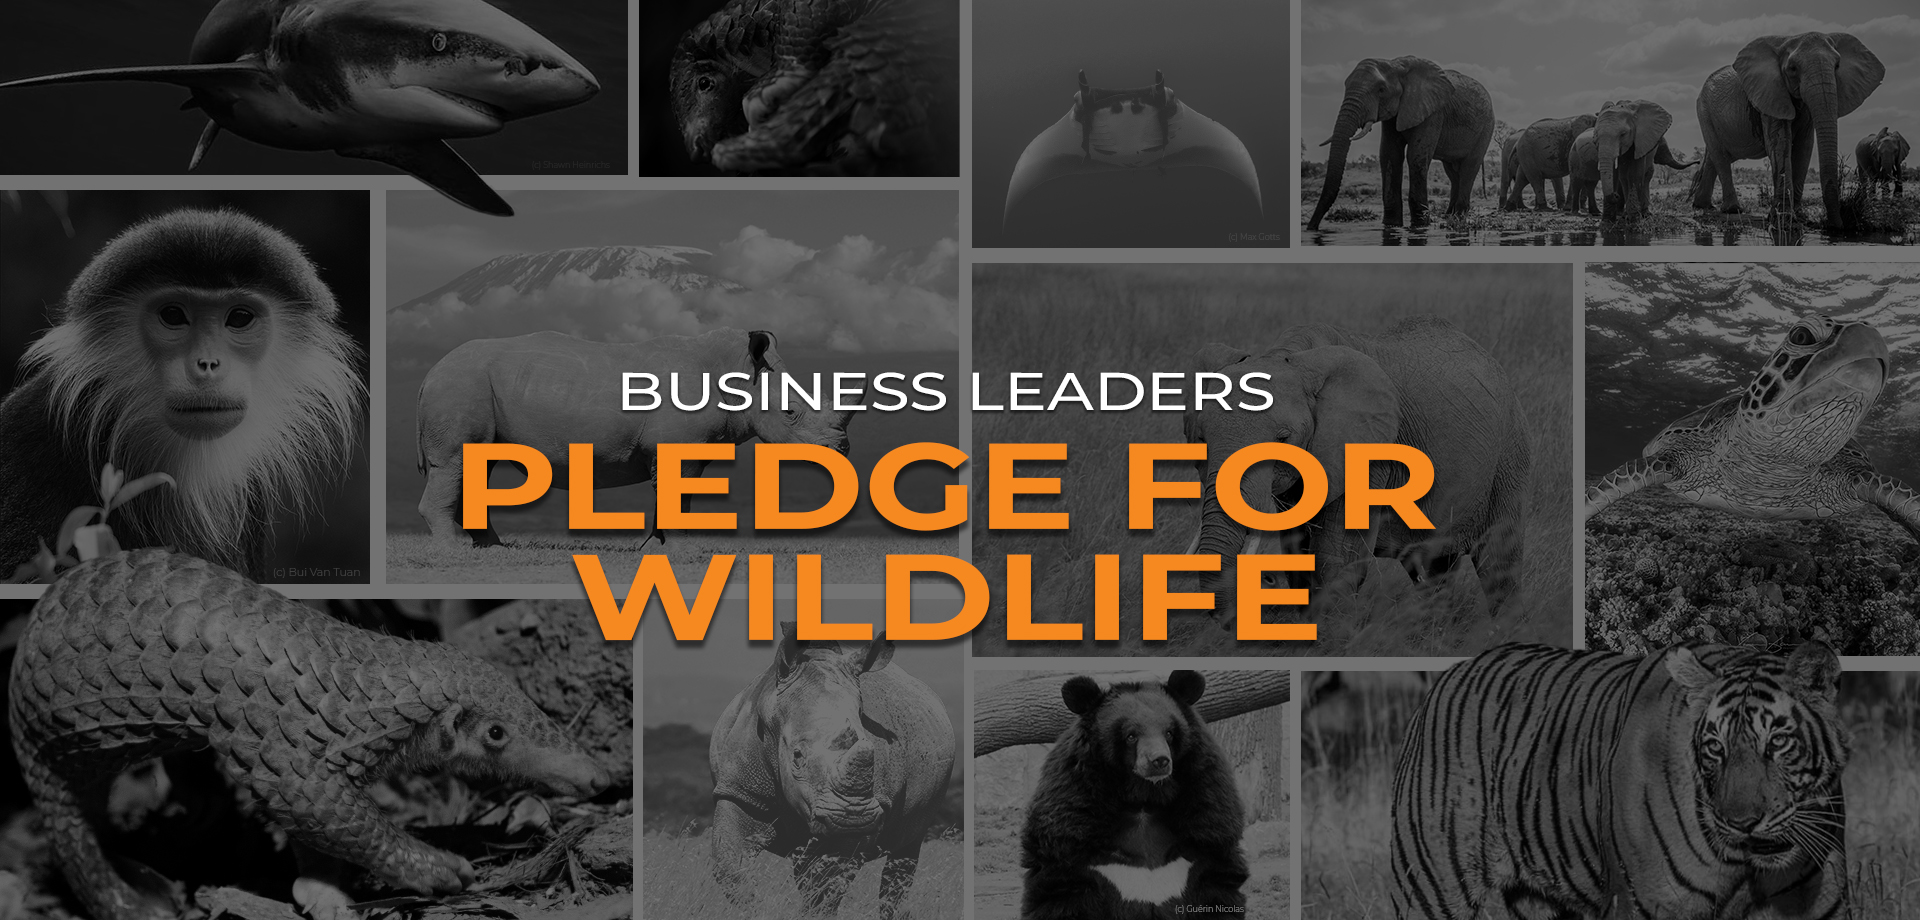 Pledge for wildlife | Pledge for wild life